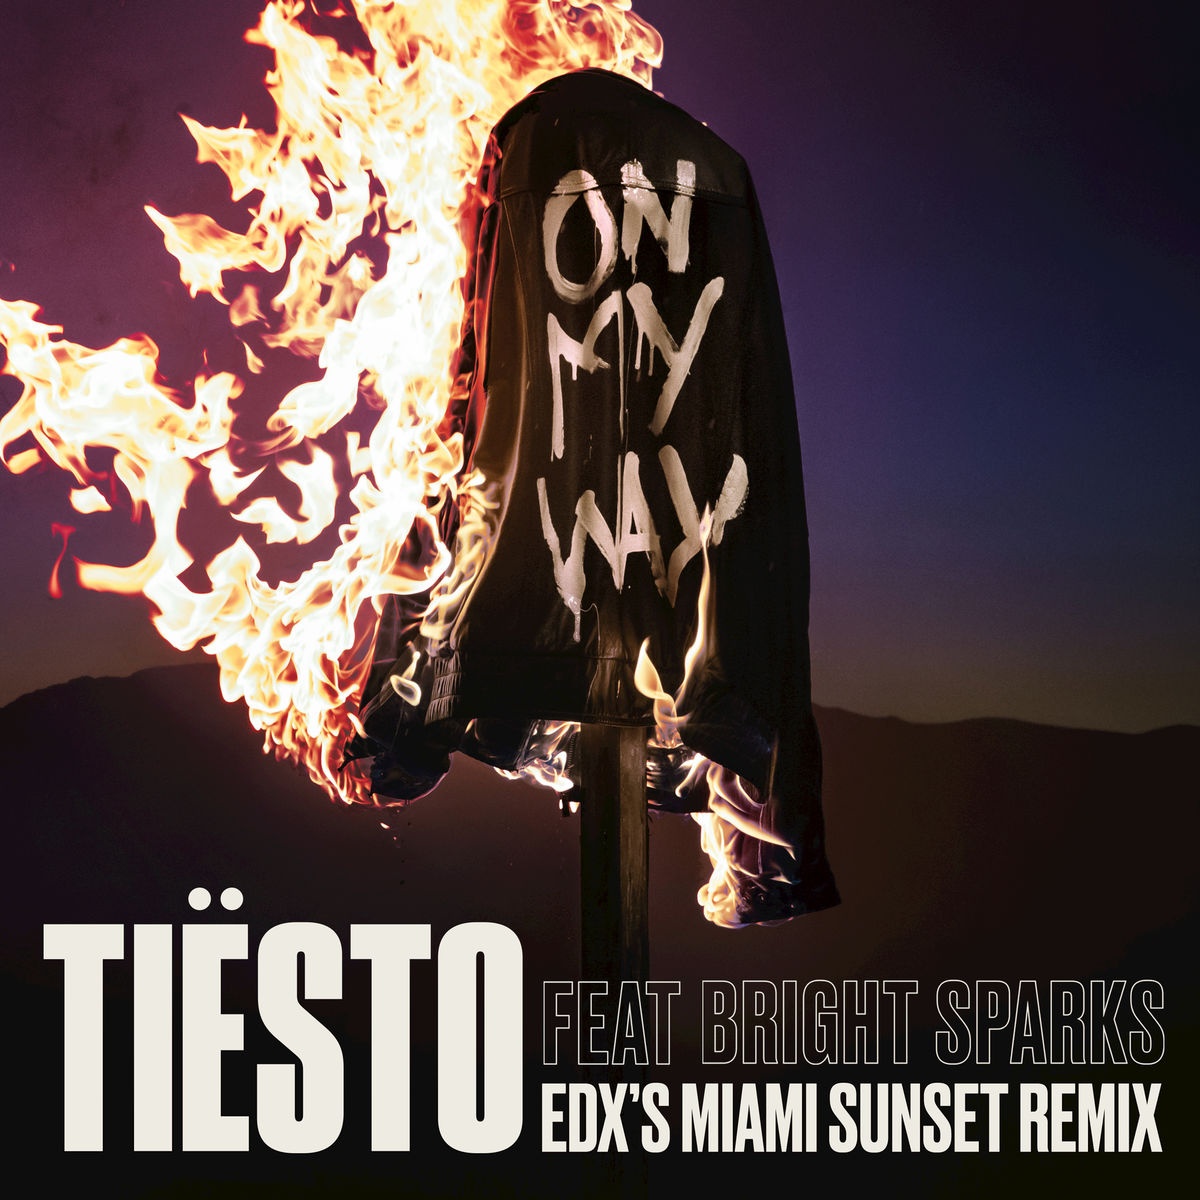 On My Way EDX' s Miami Sunset Remix